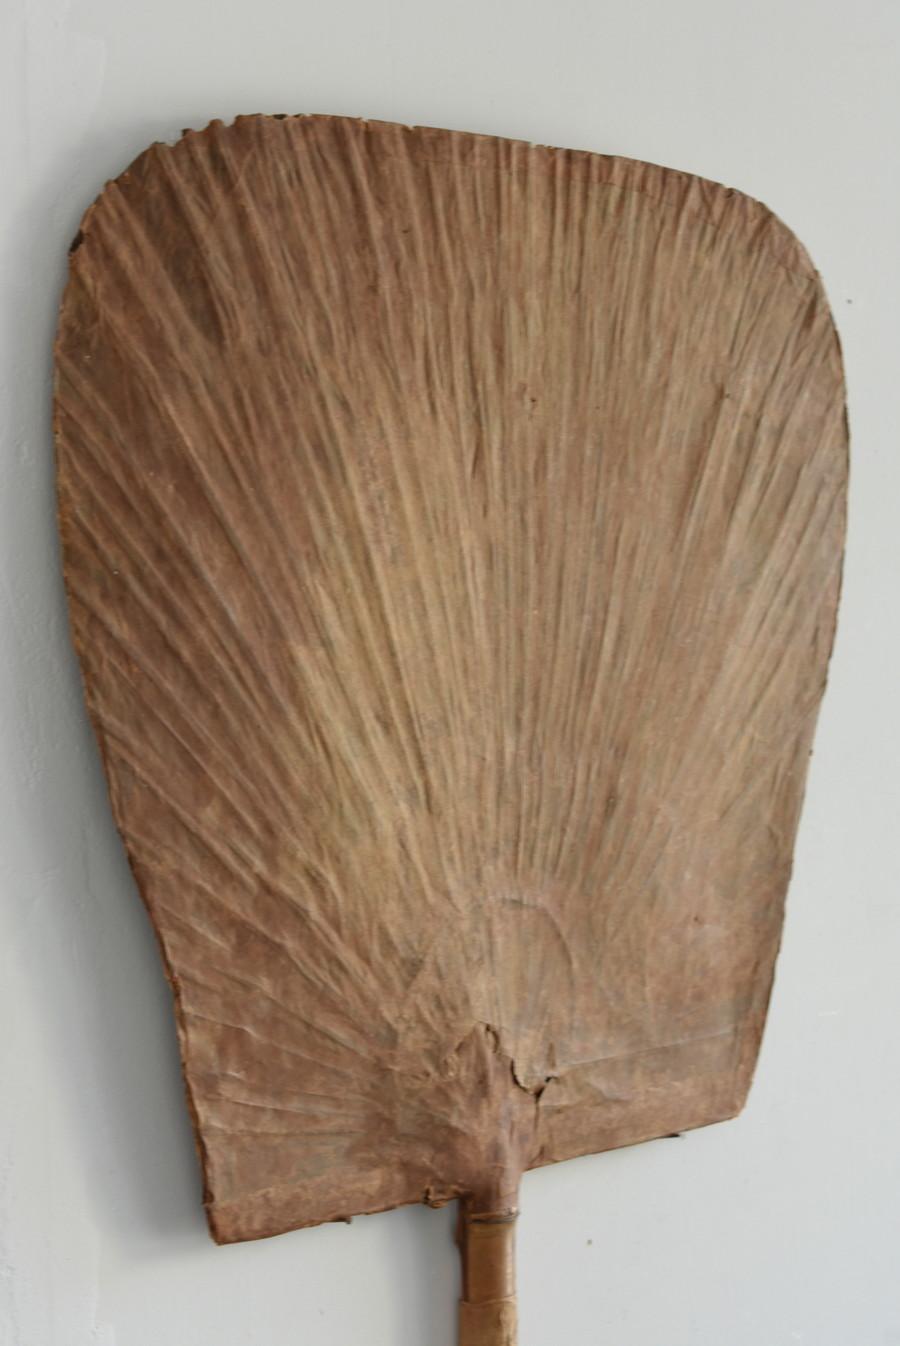 Very rare Korean antique fan made of bamboo and paper/like Ingo Maurer's Uchiwa 3